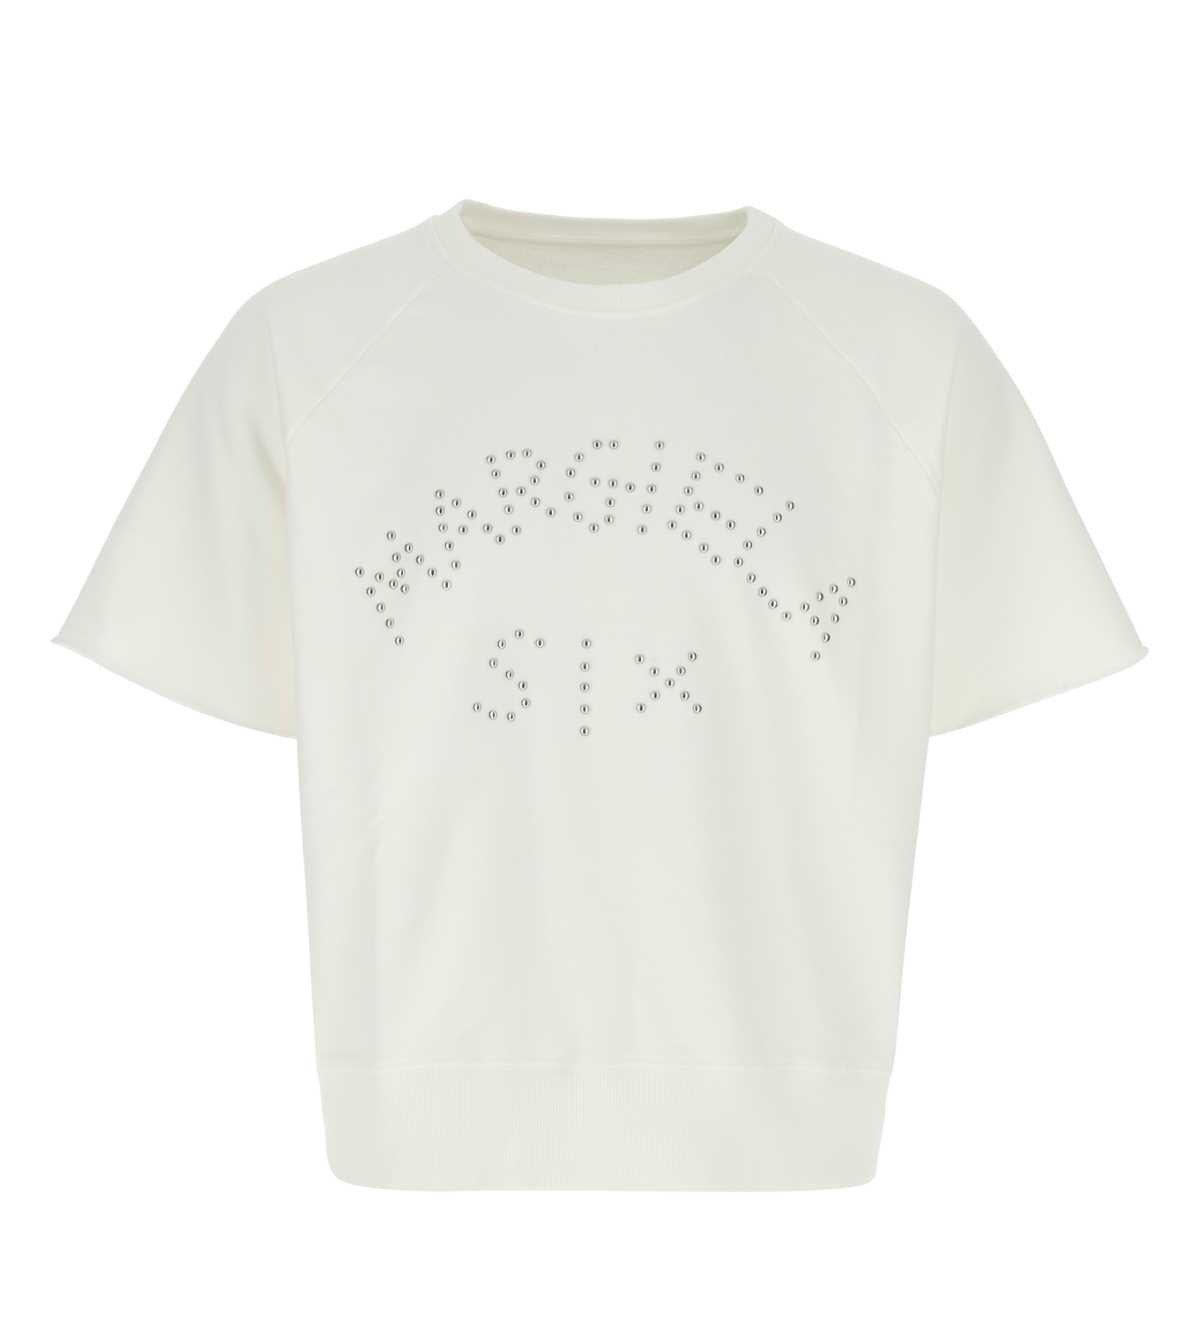 MM6 Maison Margiela Appliqué Embellished T-shirt